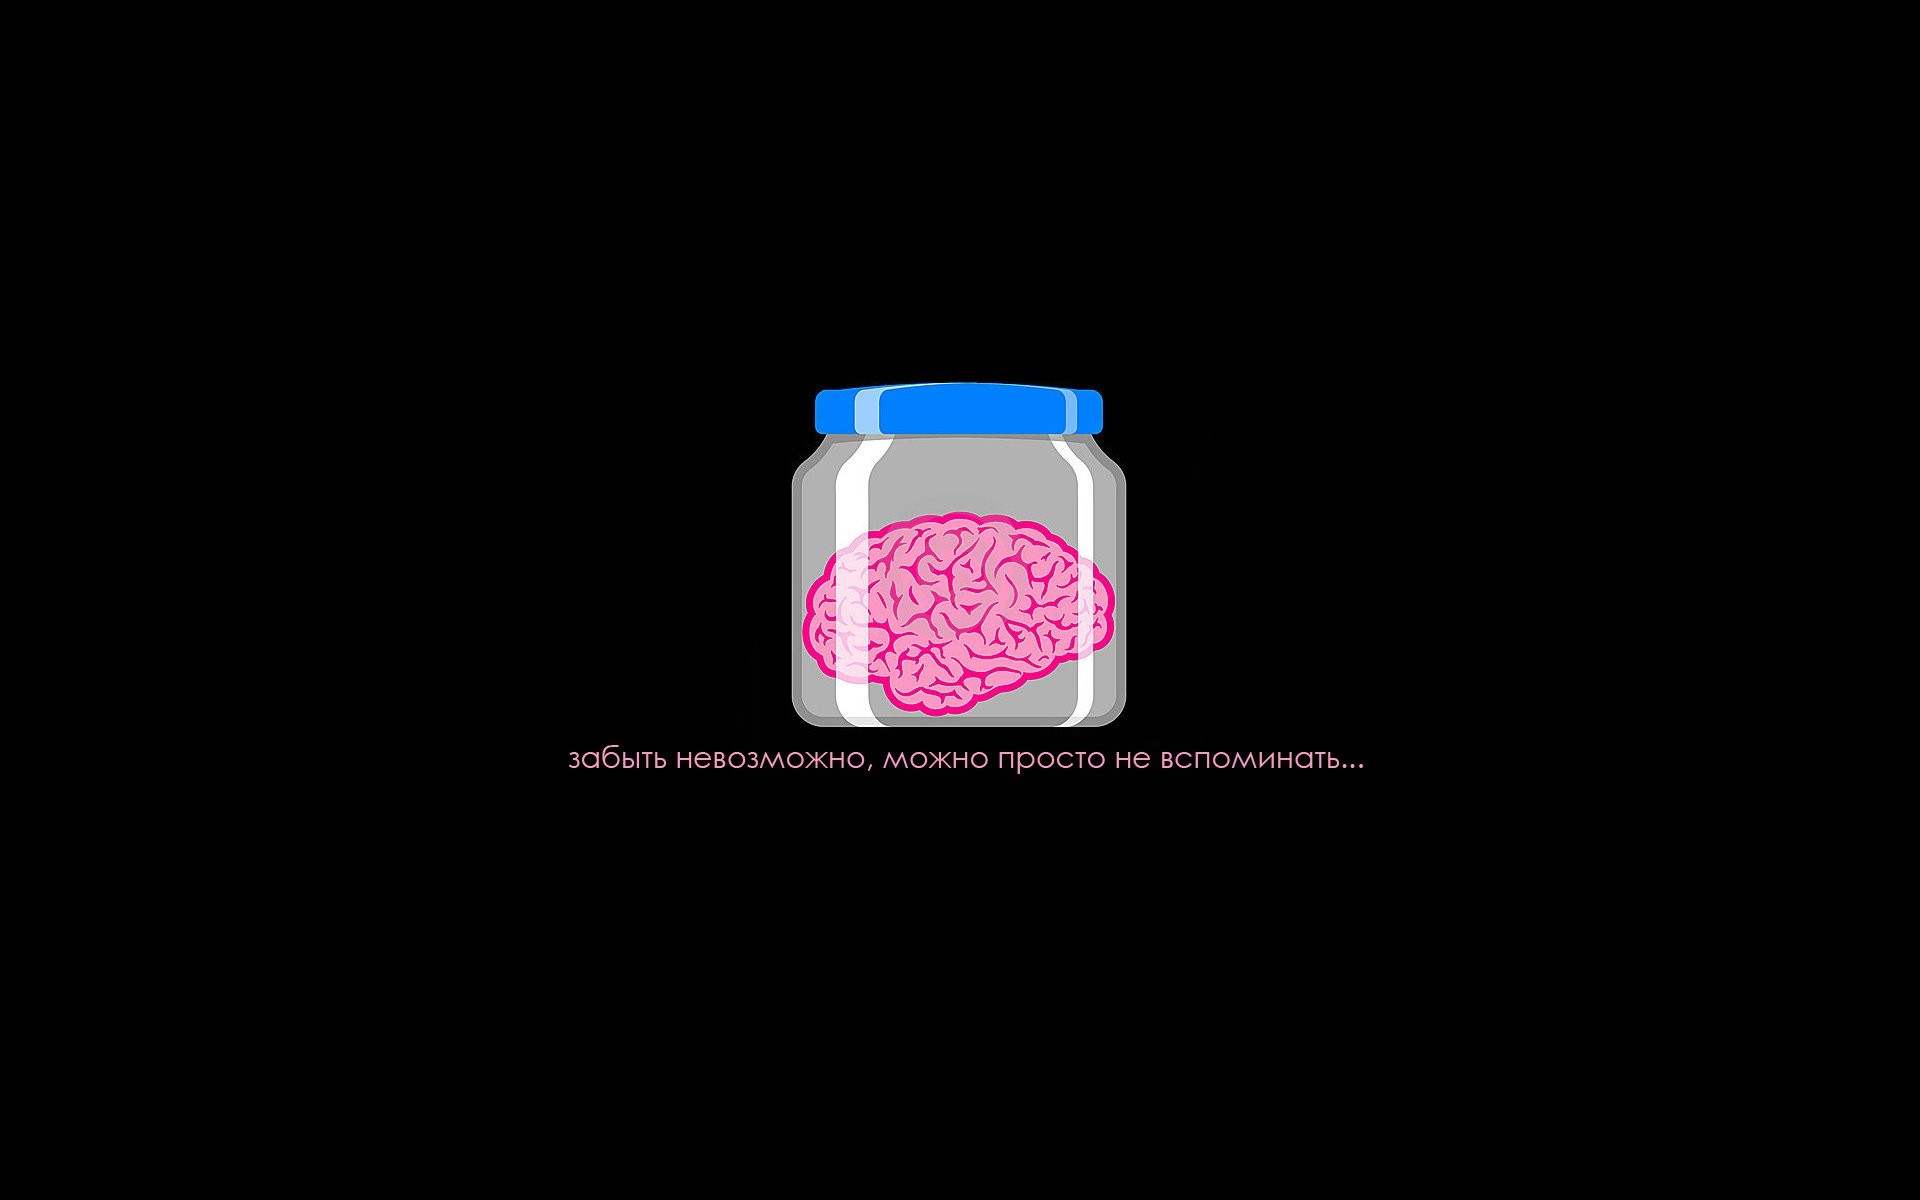 Brain in a jar. The brain is in a glass jar. The brain is pink. The jar is blue. - Grey's Anatomy